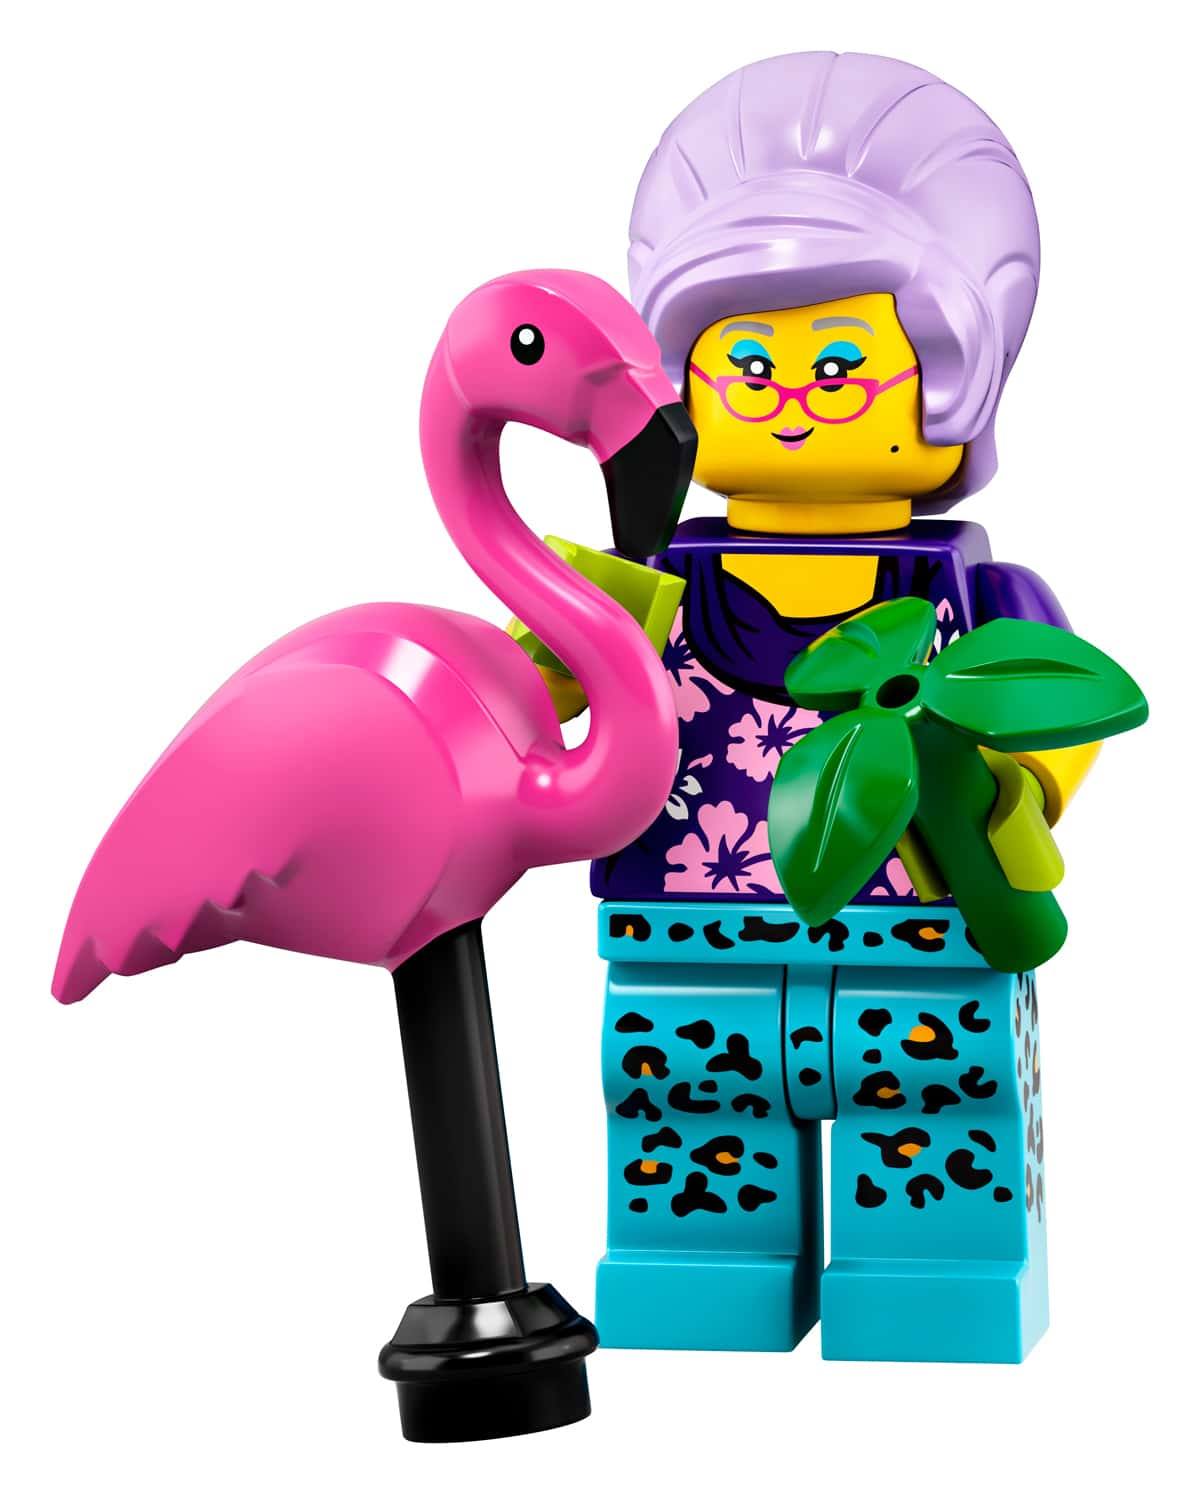 LEGO Seria 19 71025 Minifigures